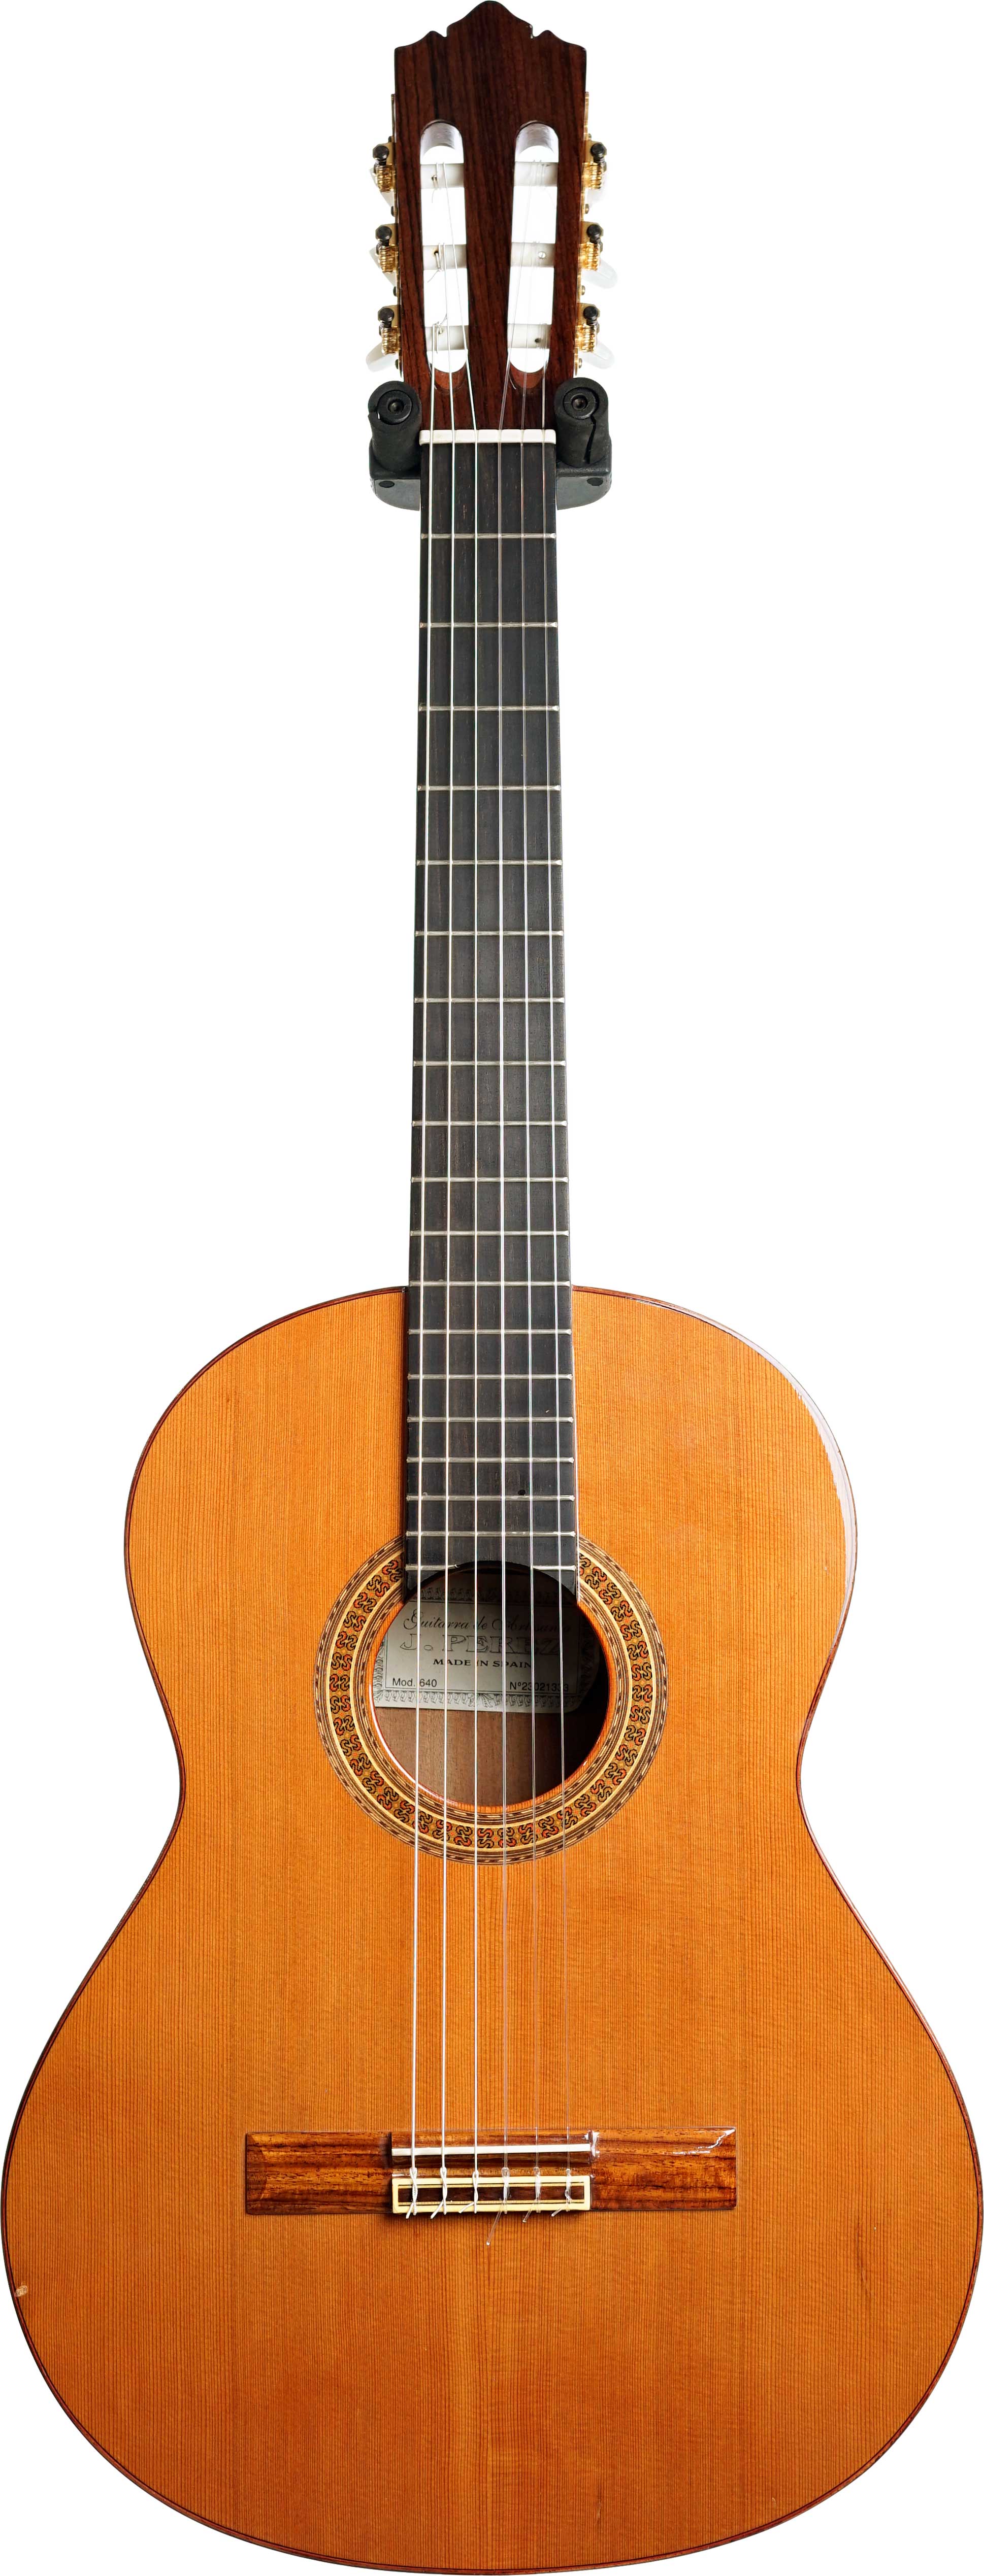 SALE限定セール中古 J.PEREZ ギター　Mod 640 MADE IN SPAIN 本体